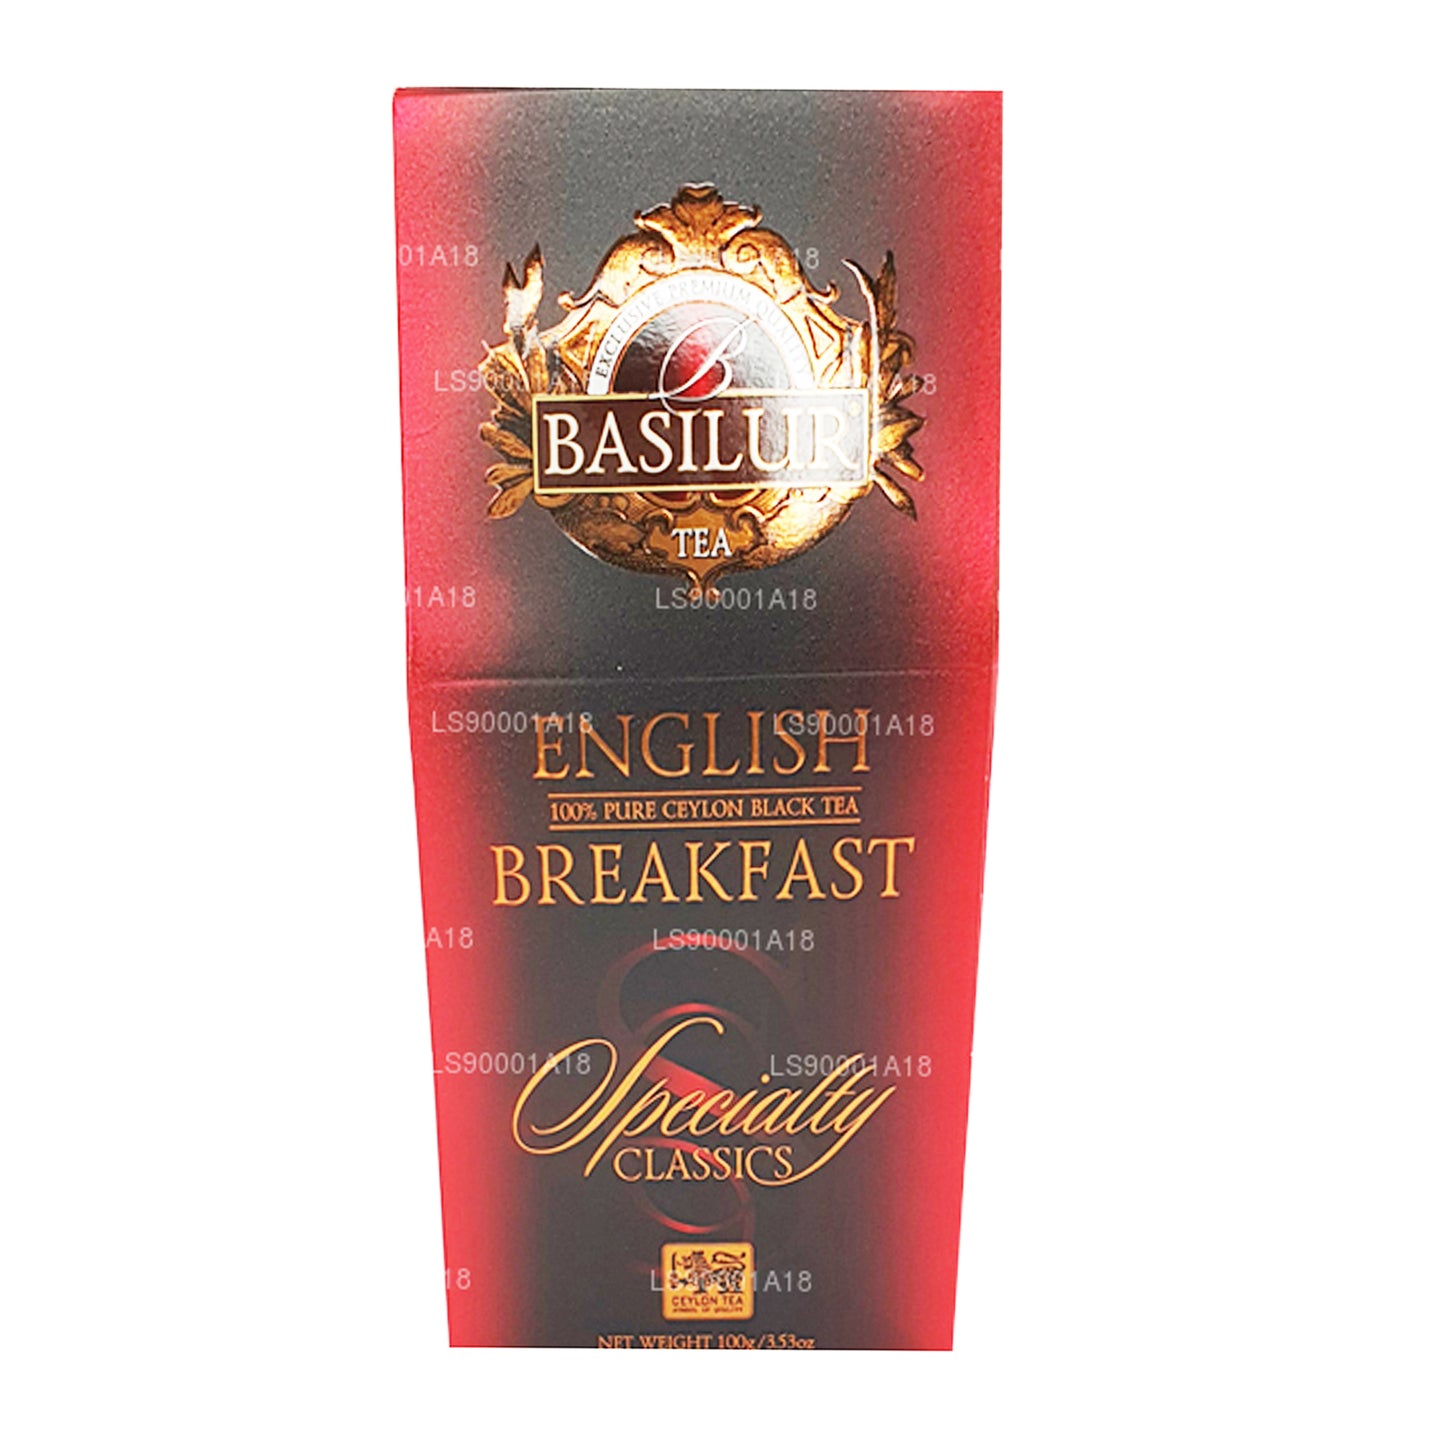 Basilur Specialty Classics İngiliz Kahvaltısı (100g)